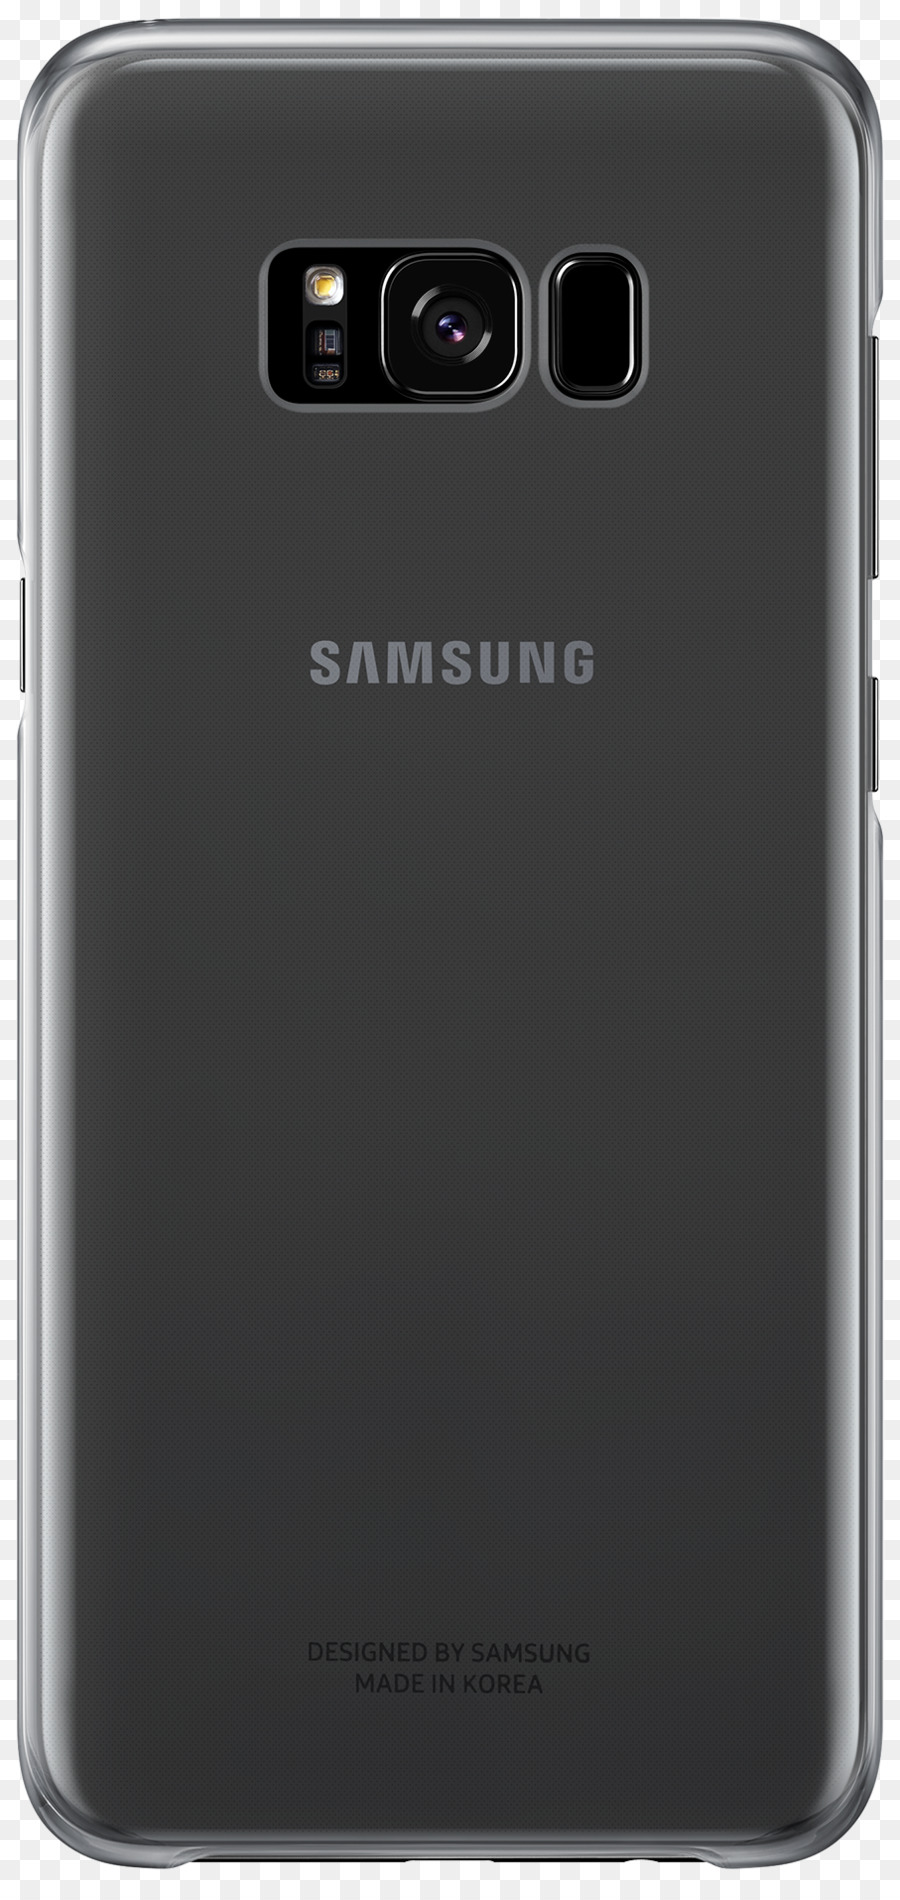 Samsung S8 Galaxy Samsung S9 sạc điện Thoại - micro s8